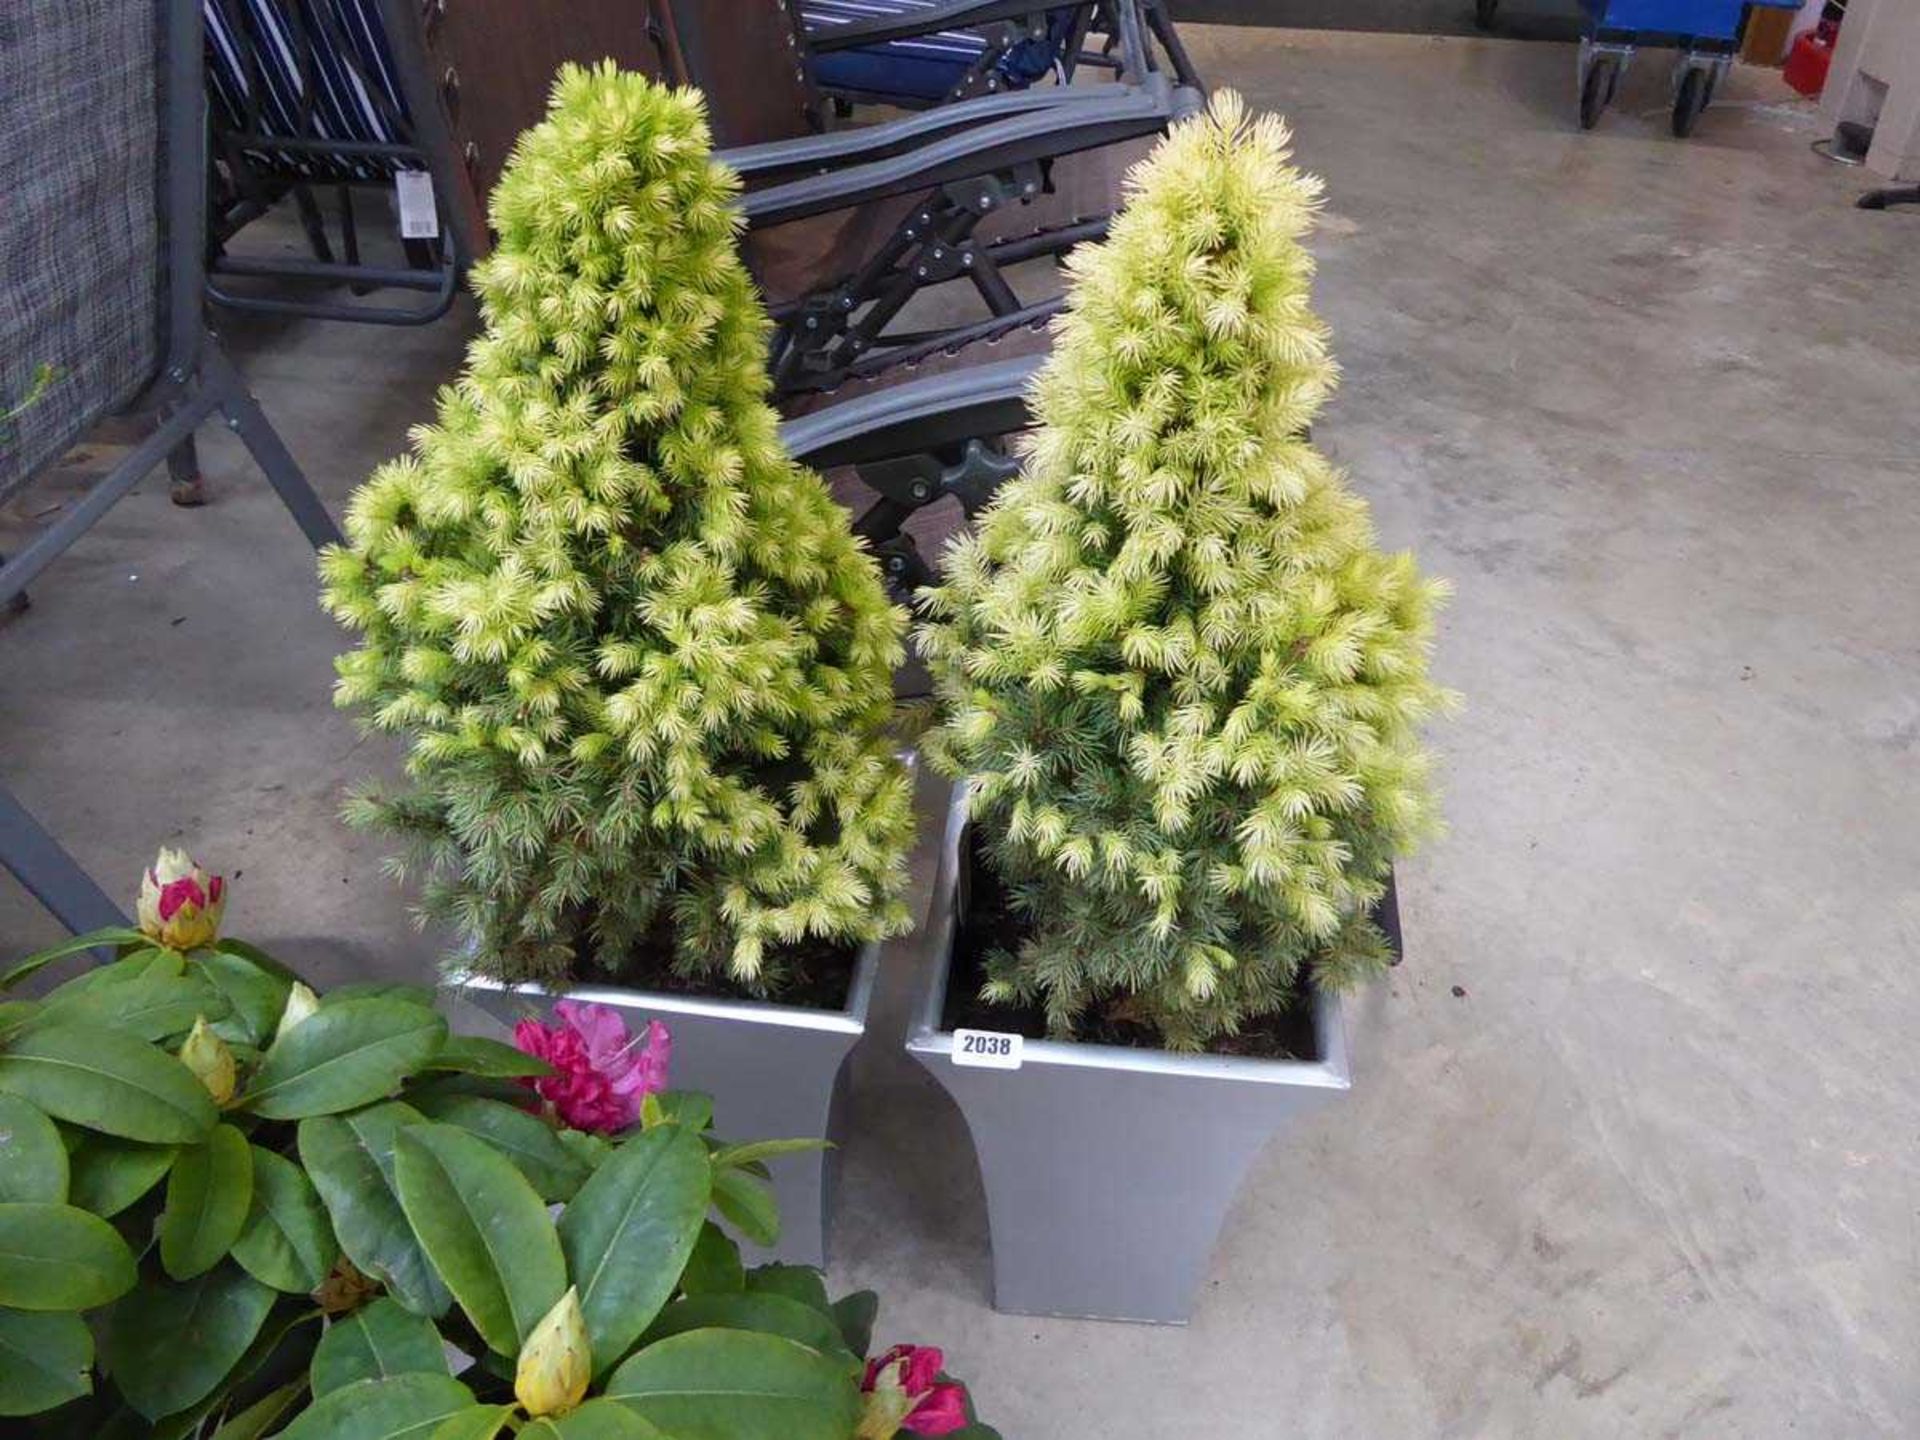 Pair of Ikea planters